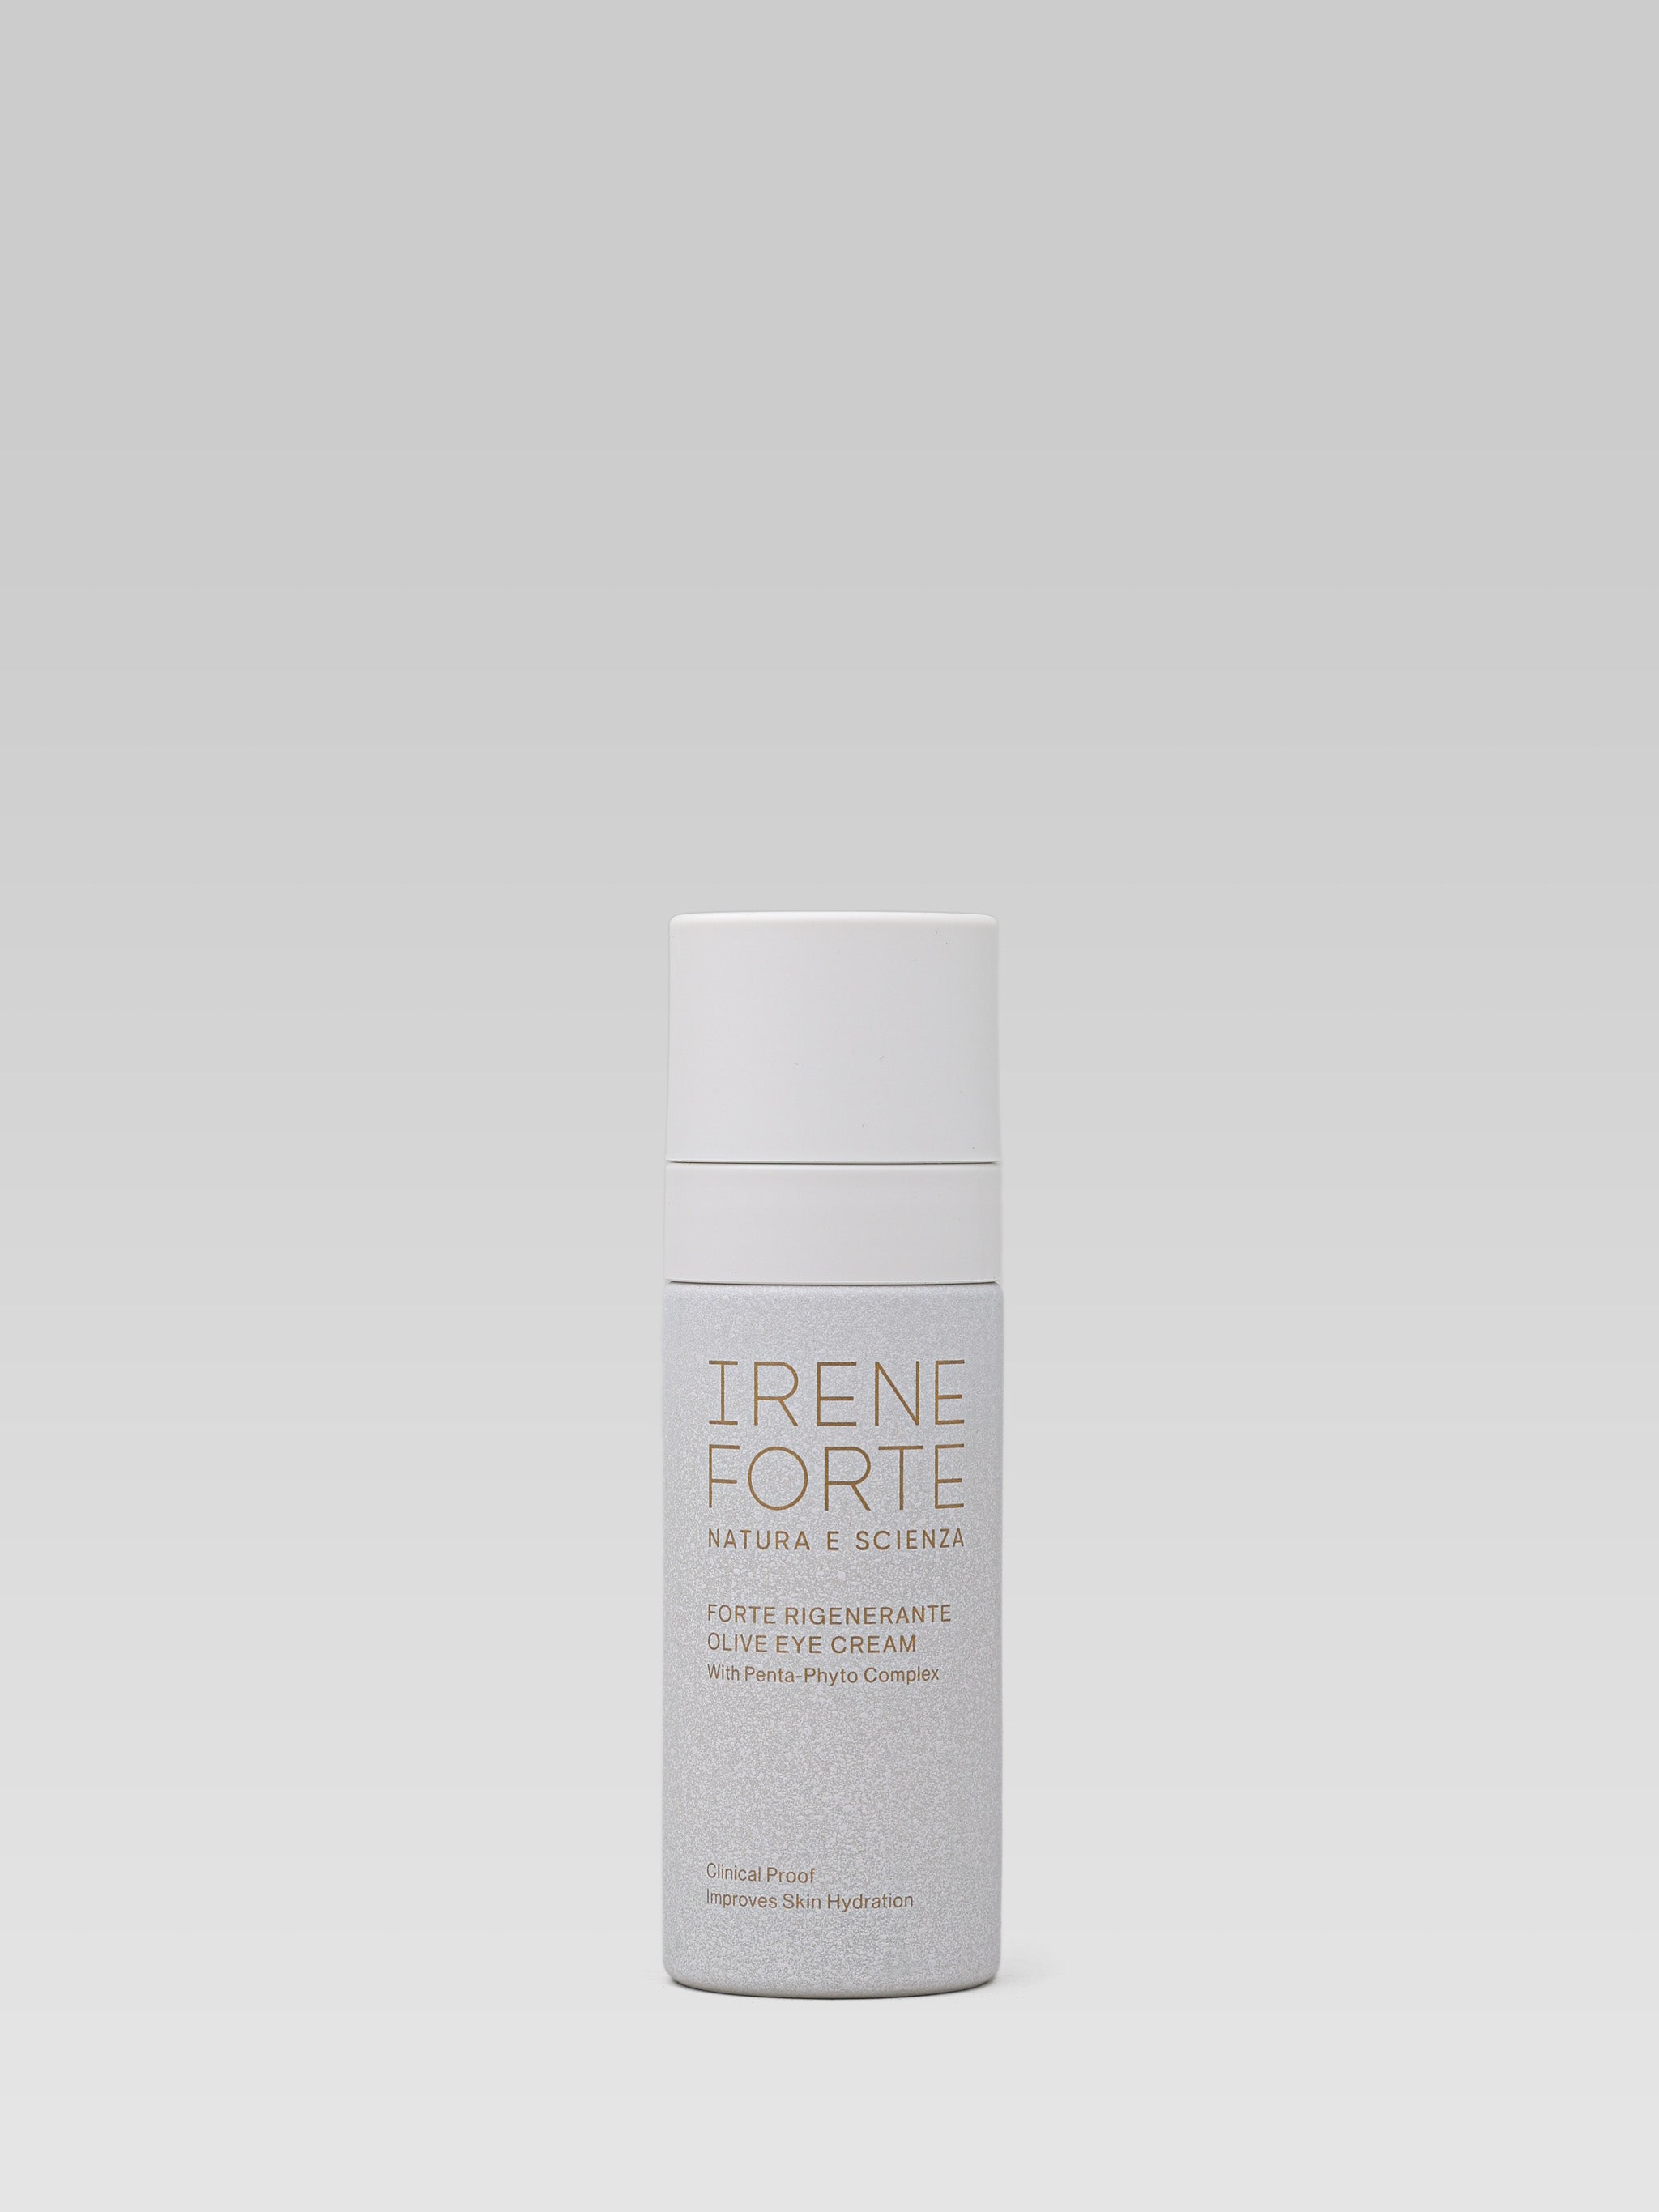 Irene Forte Olive Eye Cream product shot 